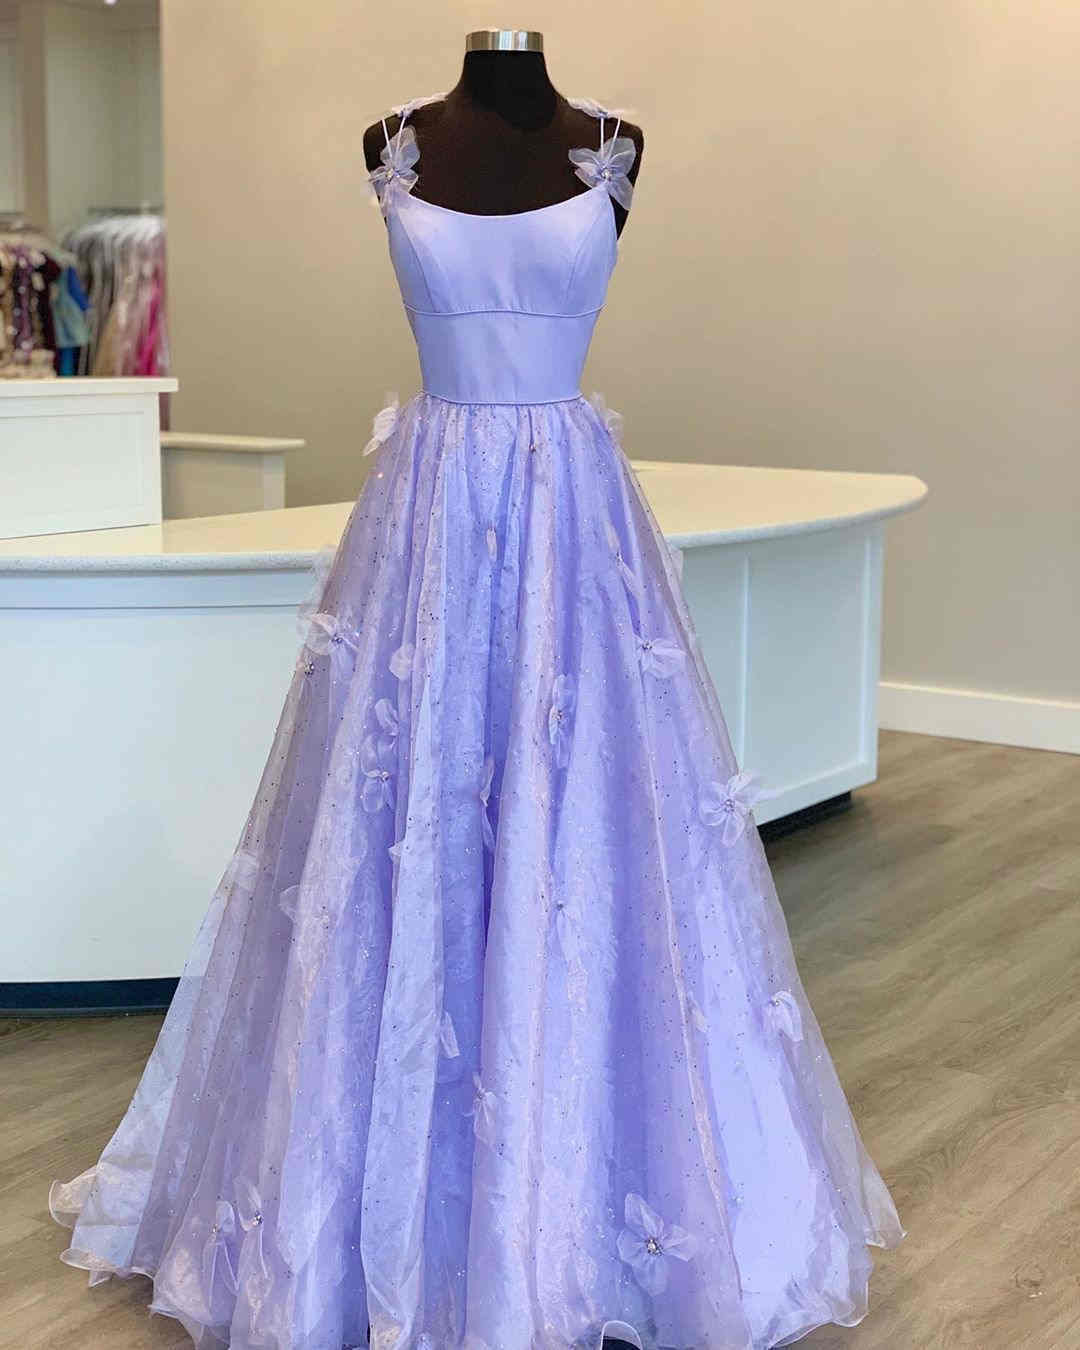 A-Line Spaghetti Straps Lavender Floral Prom Dress?A-Line Spaghetti Straps Lavender Floral Prom Dress?long dress,cheap dress,evening dress,bridal dress,prom dress 2021